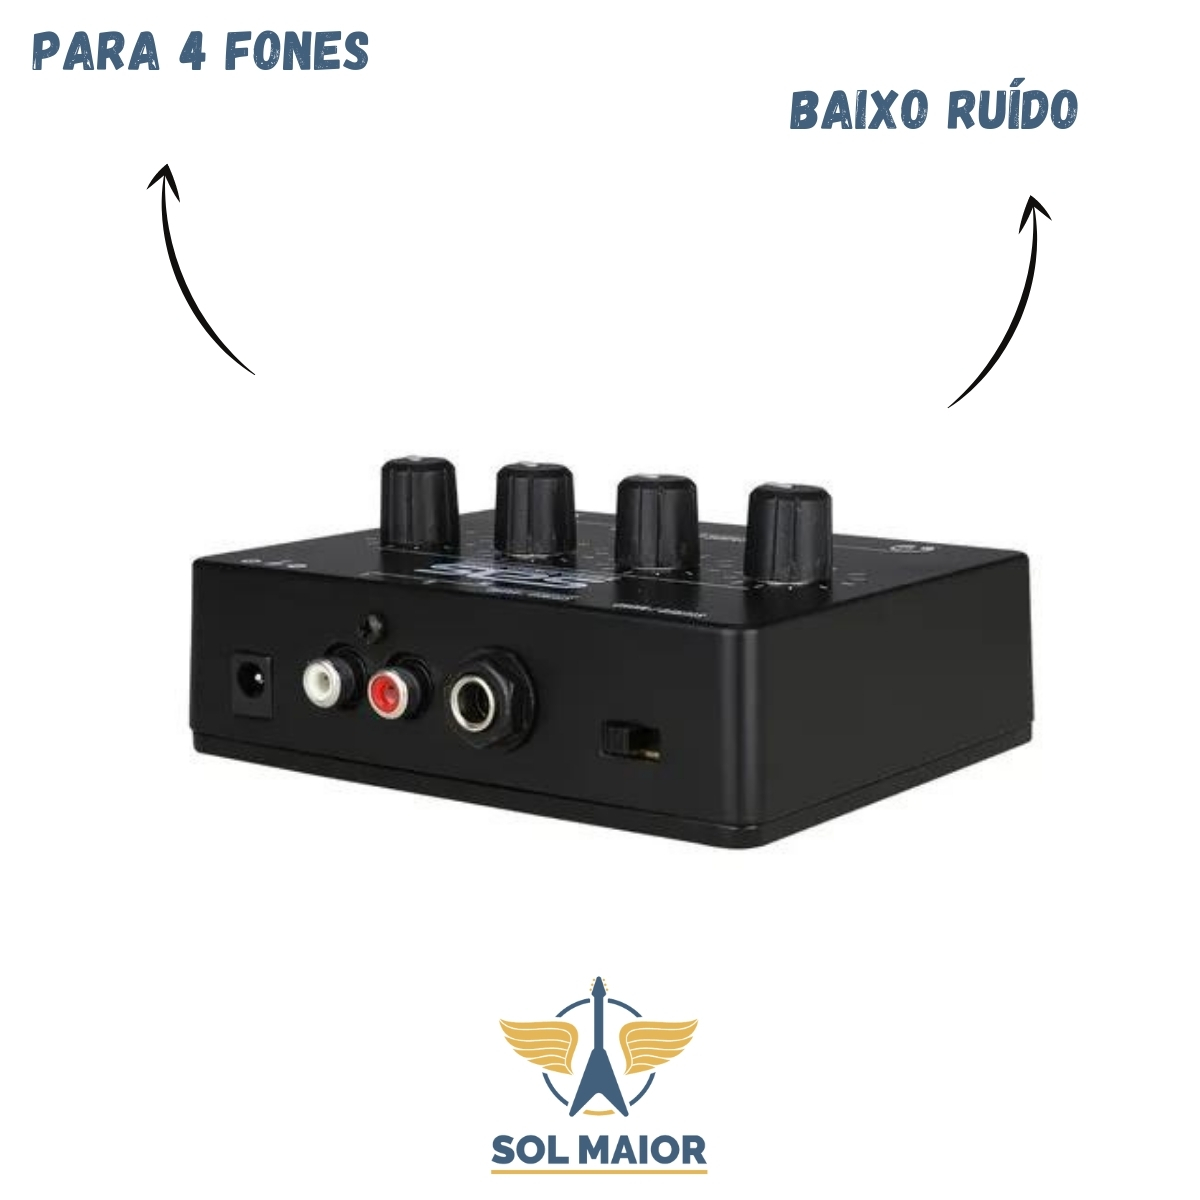 Amplificador Para 4 Fones De Ouvido Af4 Preto - Santo Angelo - Grupo Solmaior